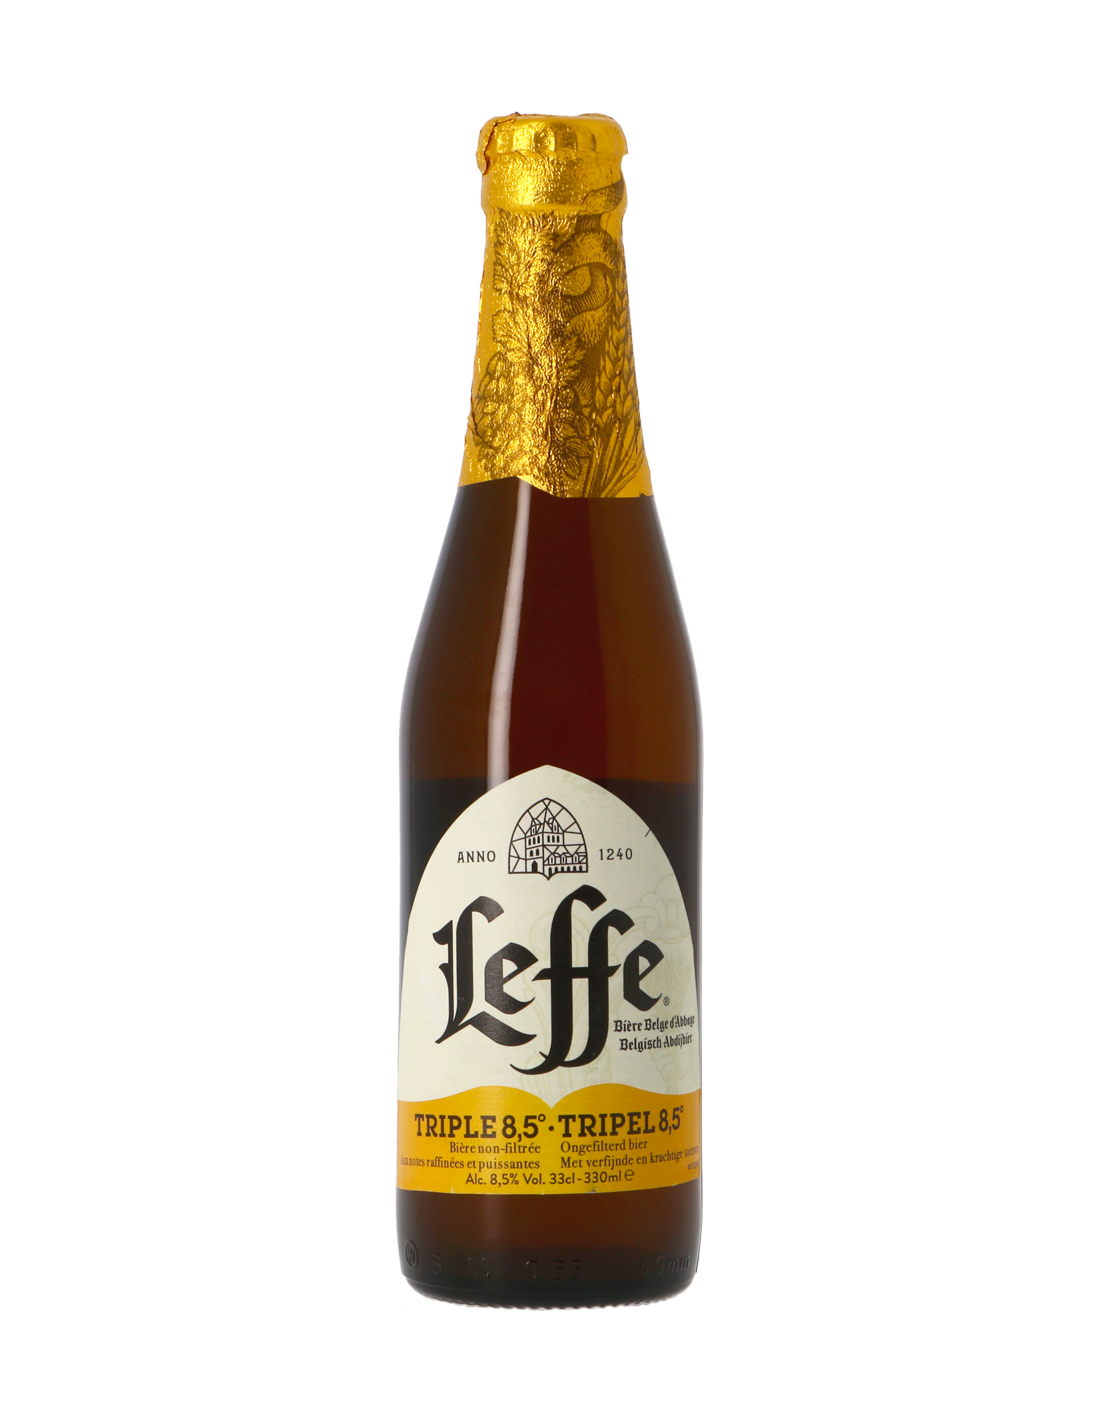 Bere blonda, nefiltrata Leffe, 8.5% alc., 0.33L, Belgia alcooldiscount.ro